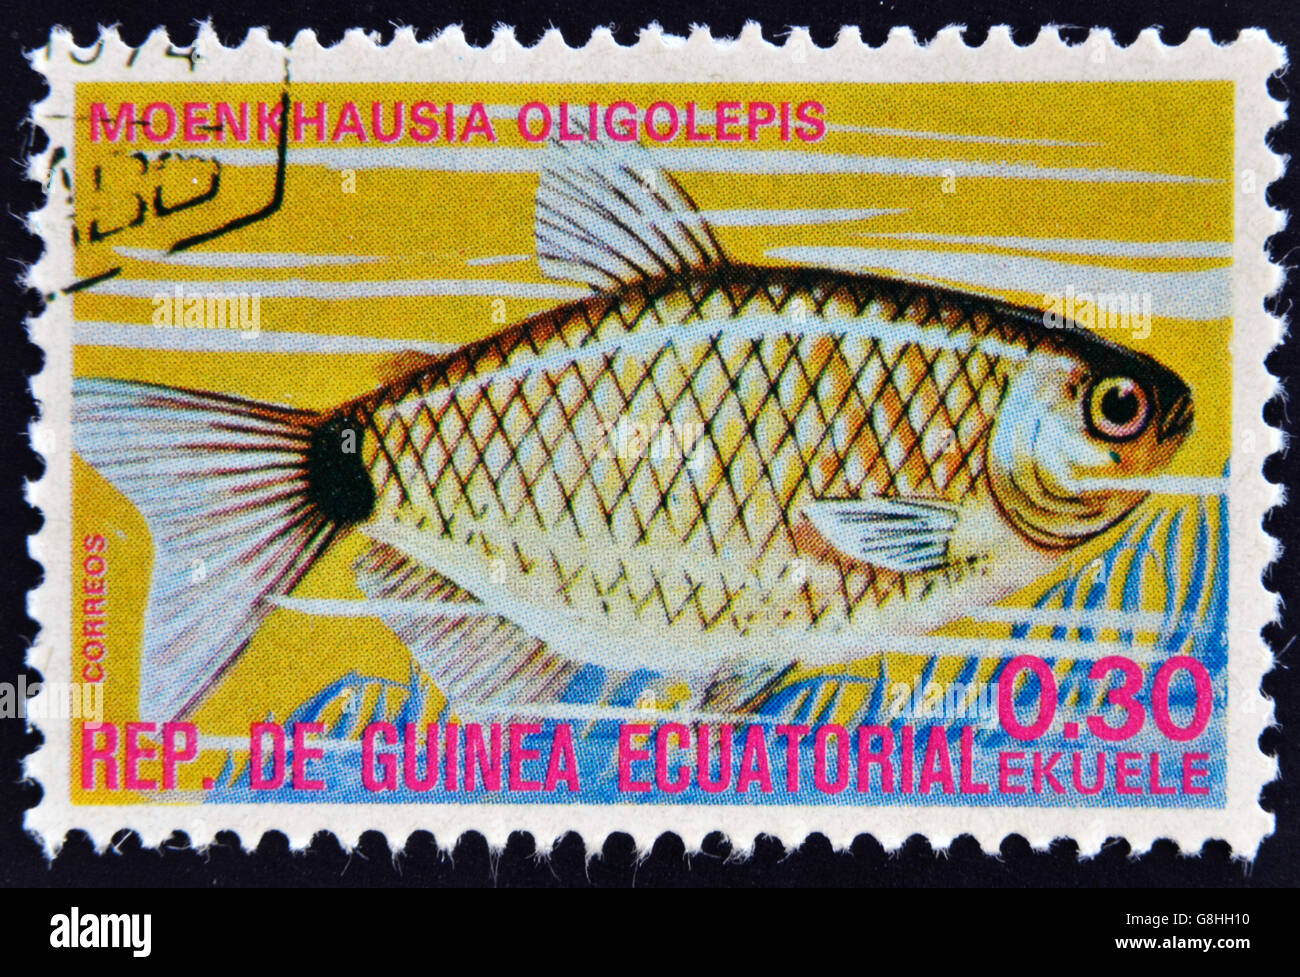 EQUATORIAL GUINEA - CIRCA 1974: A stamp printed in Guinea Ecuatorial dedicated to exotic fish shows moenkhausia oligolepis, circ Stock Photo